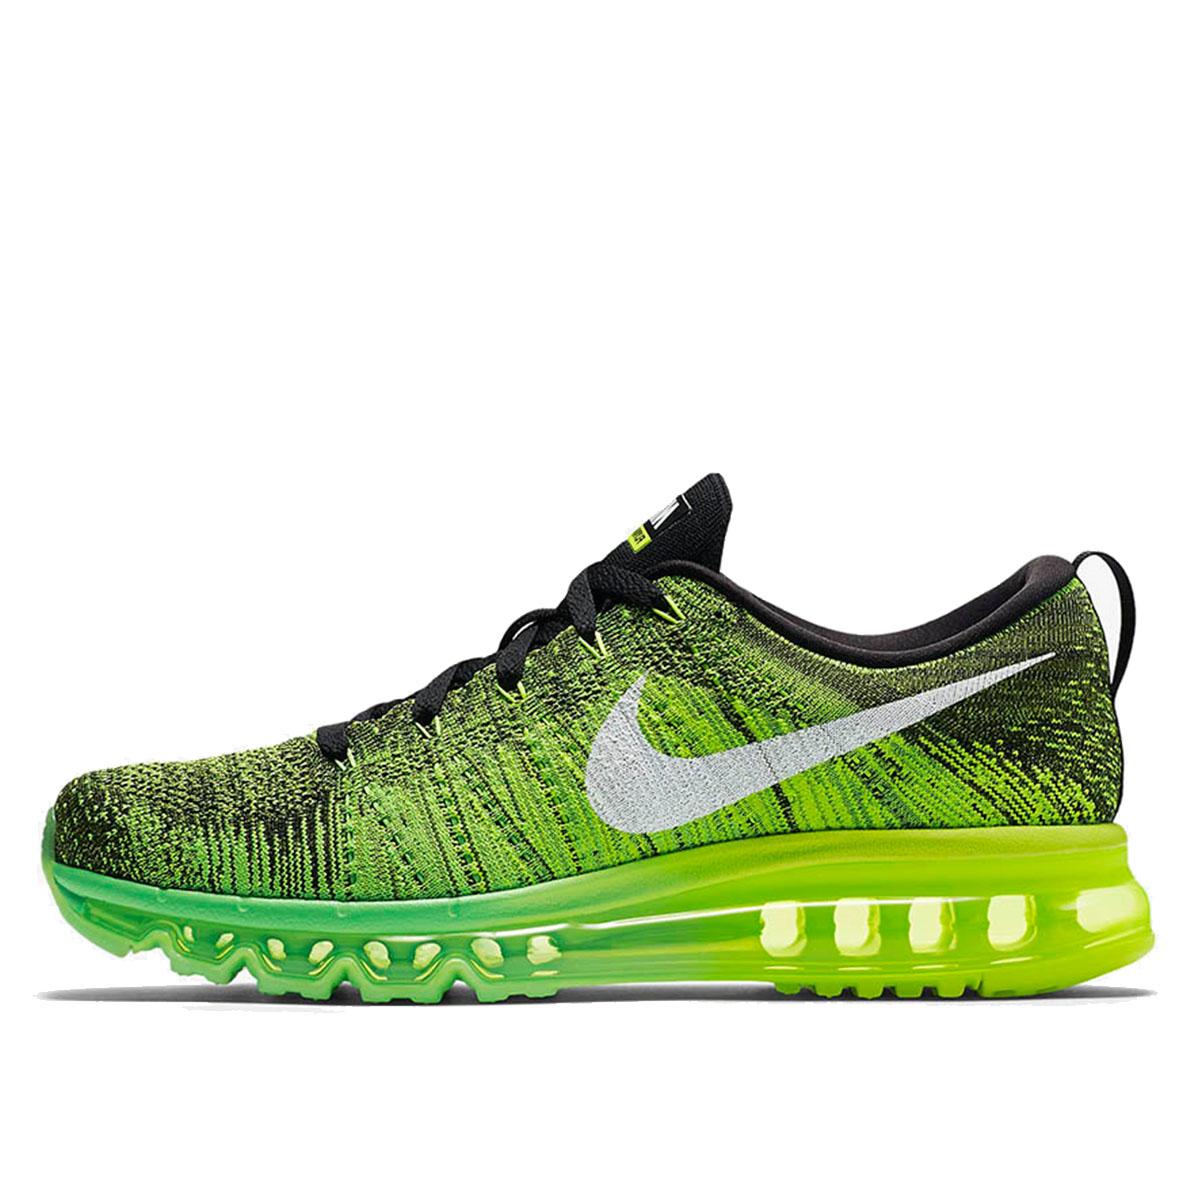 Найк кроссовки для бега мужские. Nike Flyknit Max. Nike Air Flyknit. Кроссовки Nike Green 2015. Flyknit Nike АИР Макс зеленые.